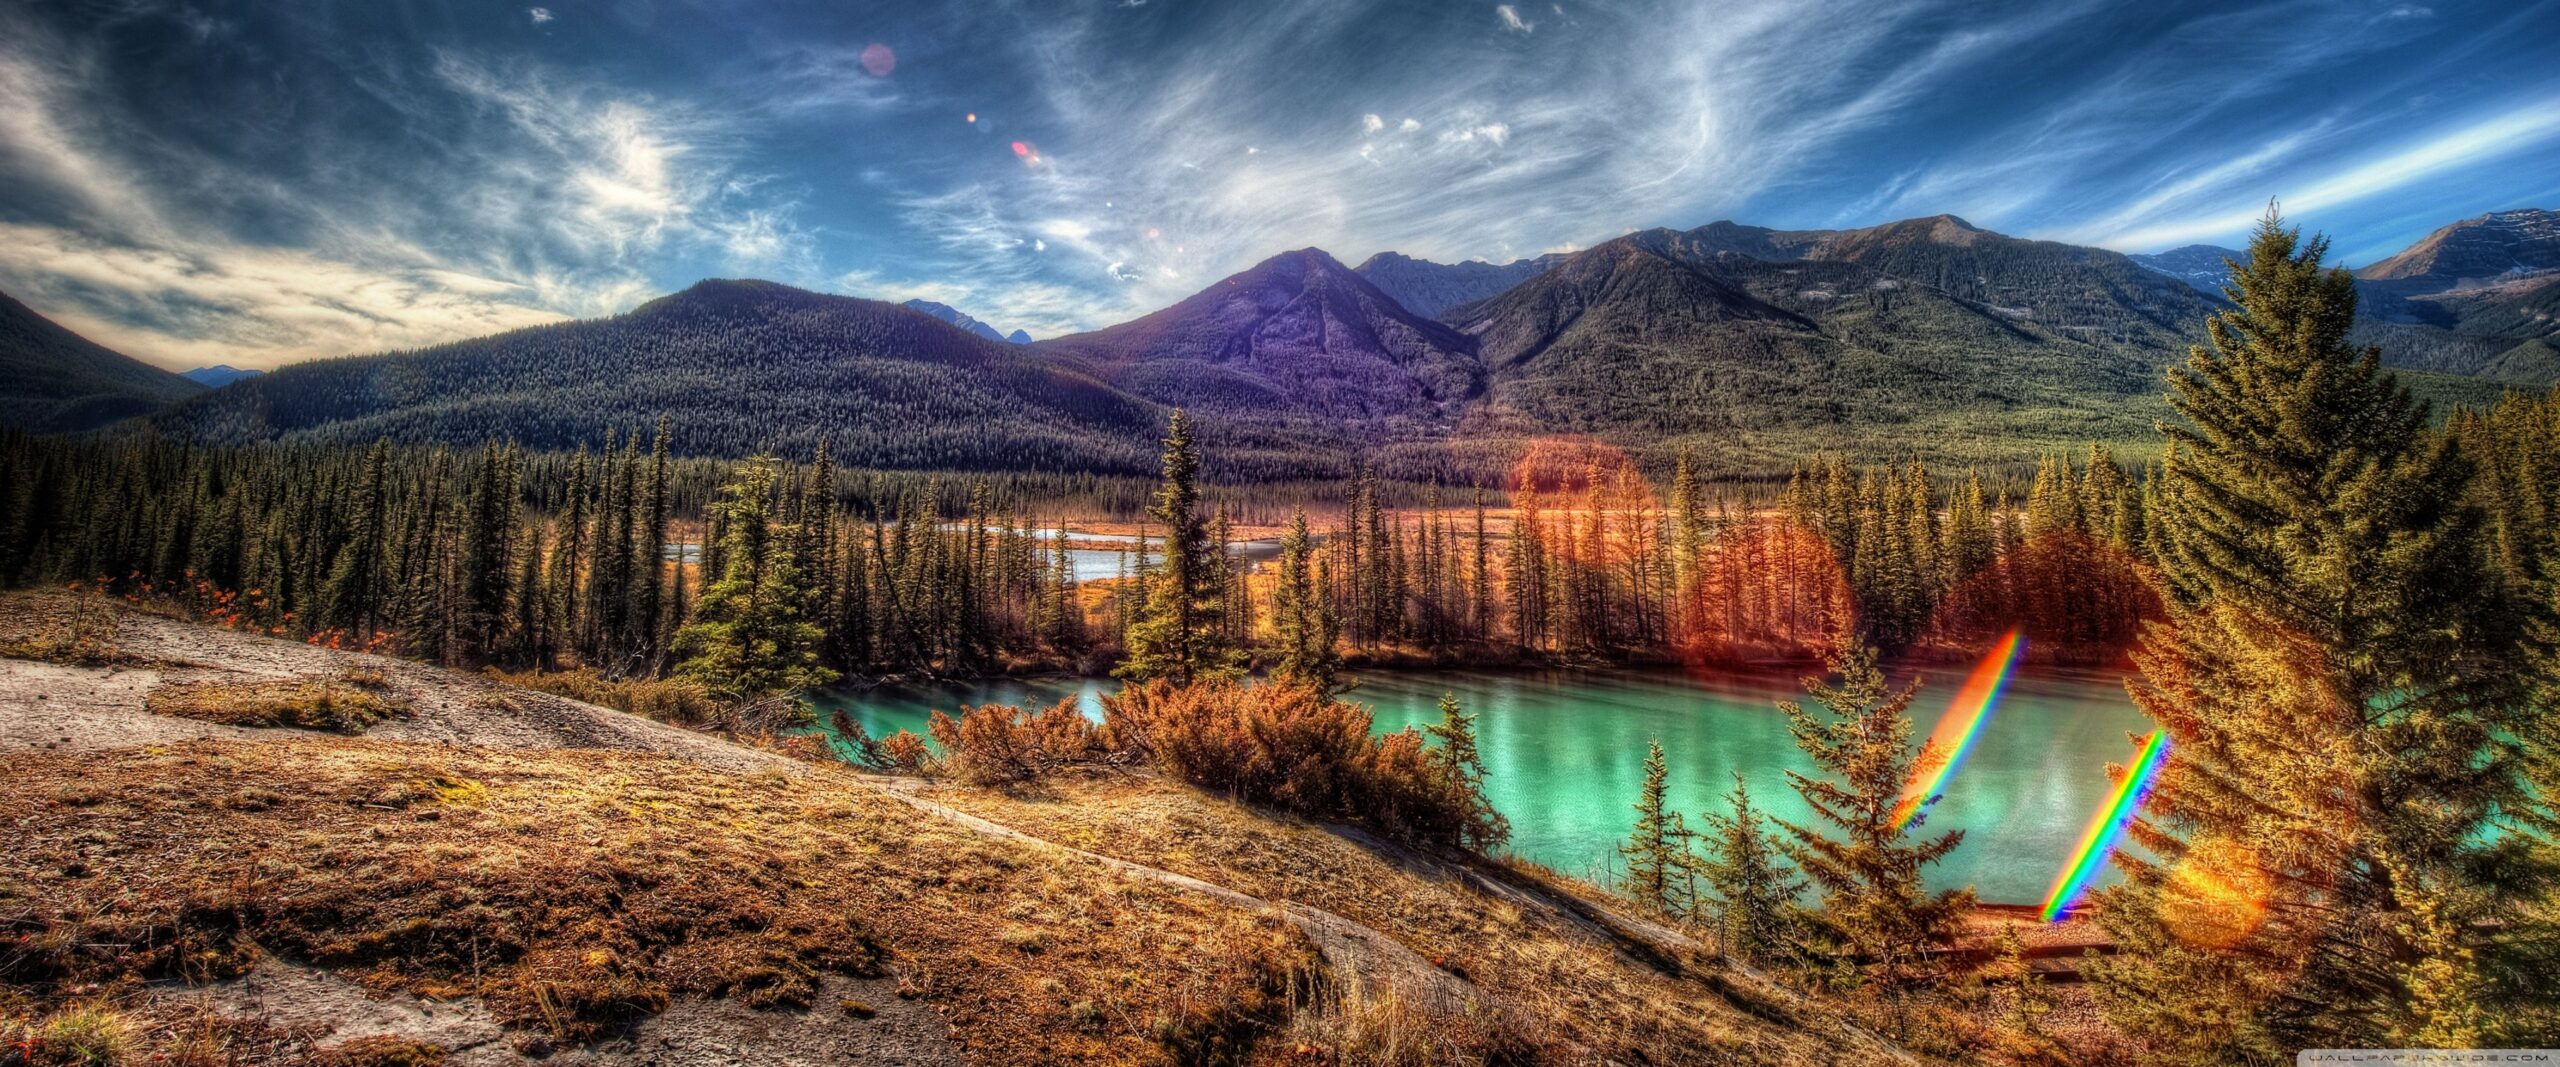 Banff National Park, Alberta, Canada ❤ K 2K Desk 4K Wallpapers for